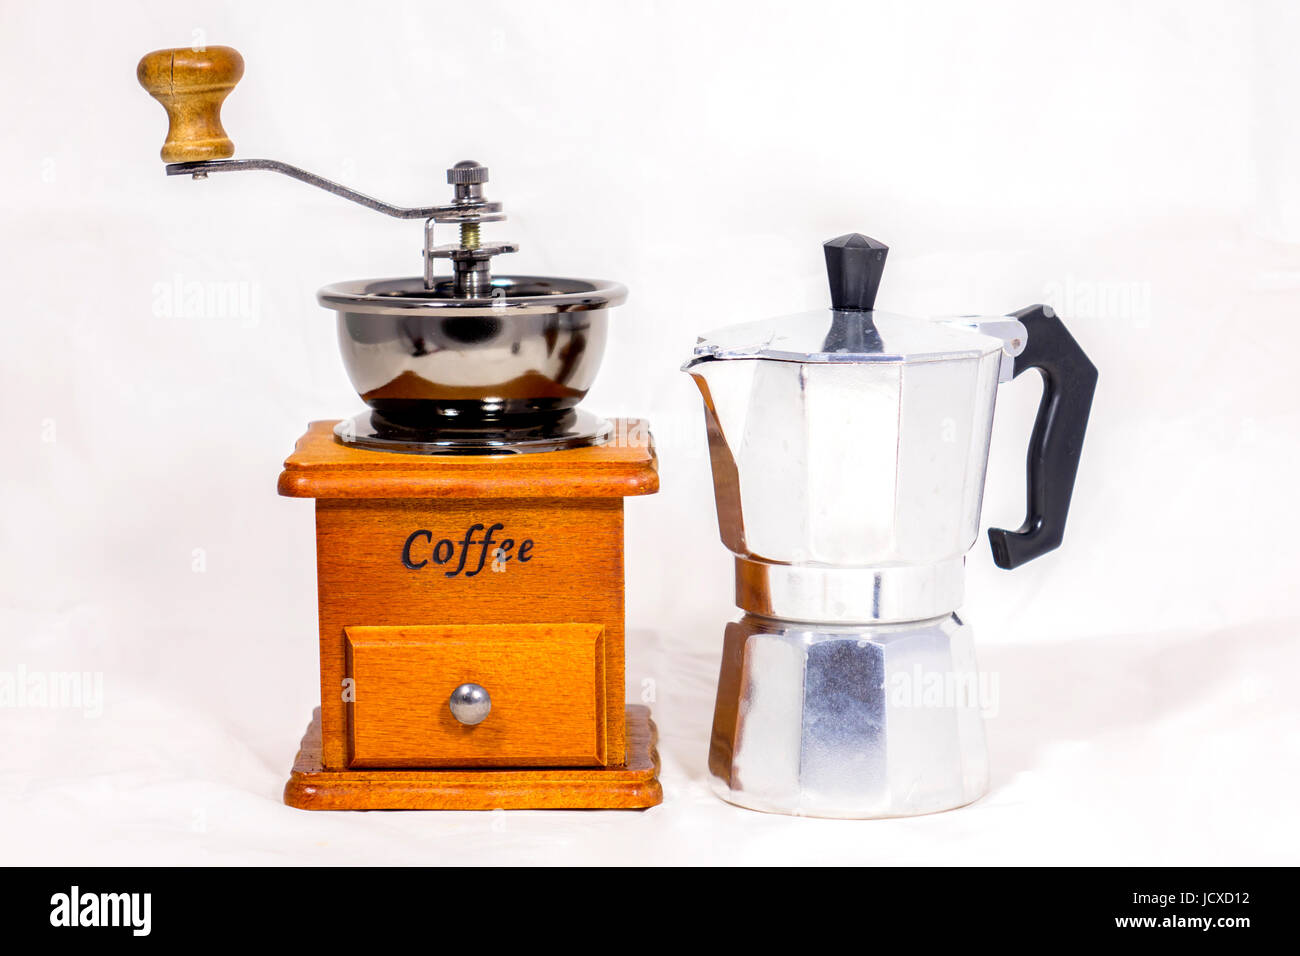 Macinino da caffè e la caldaia, vintage su sfondo bianco Foto Stock